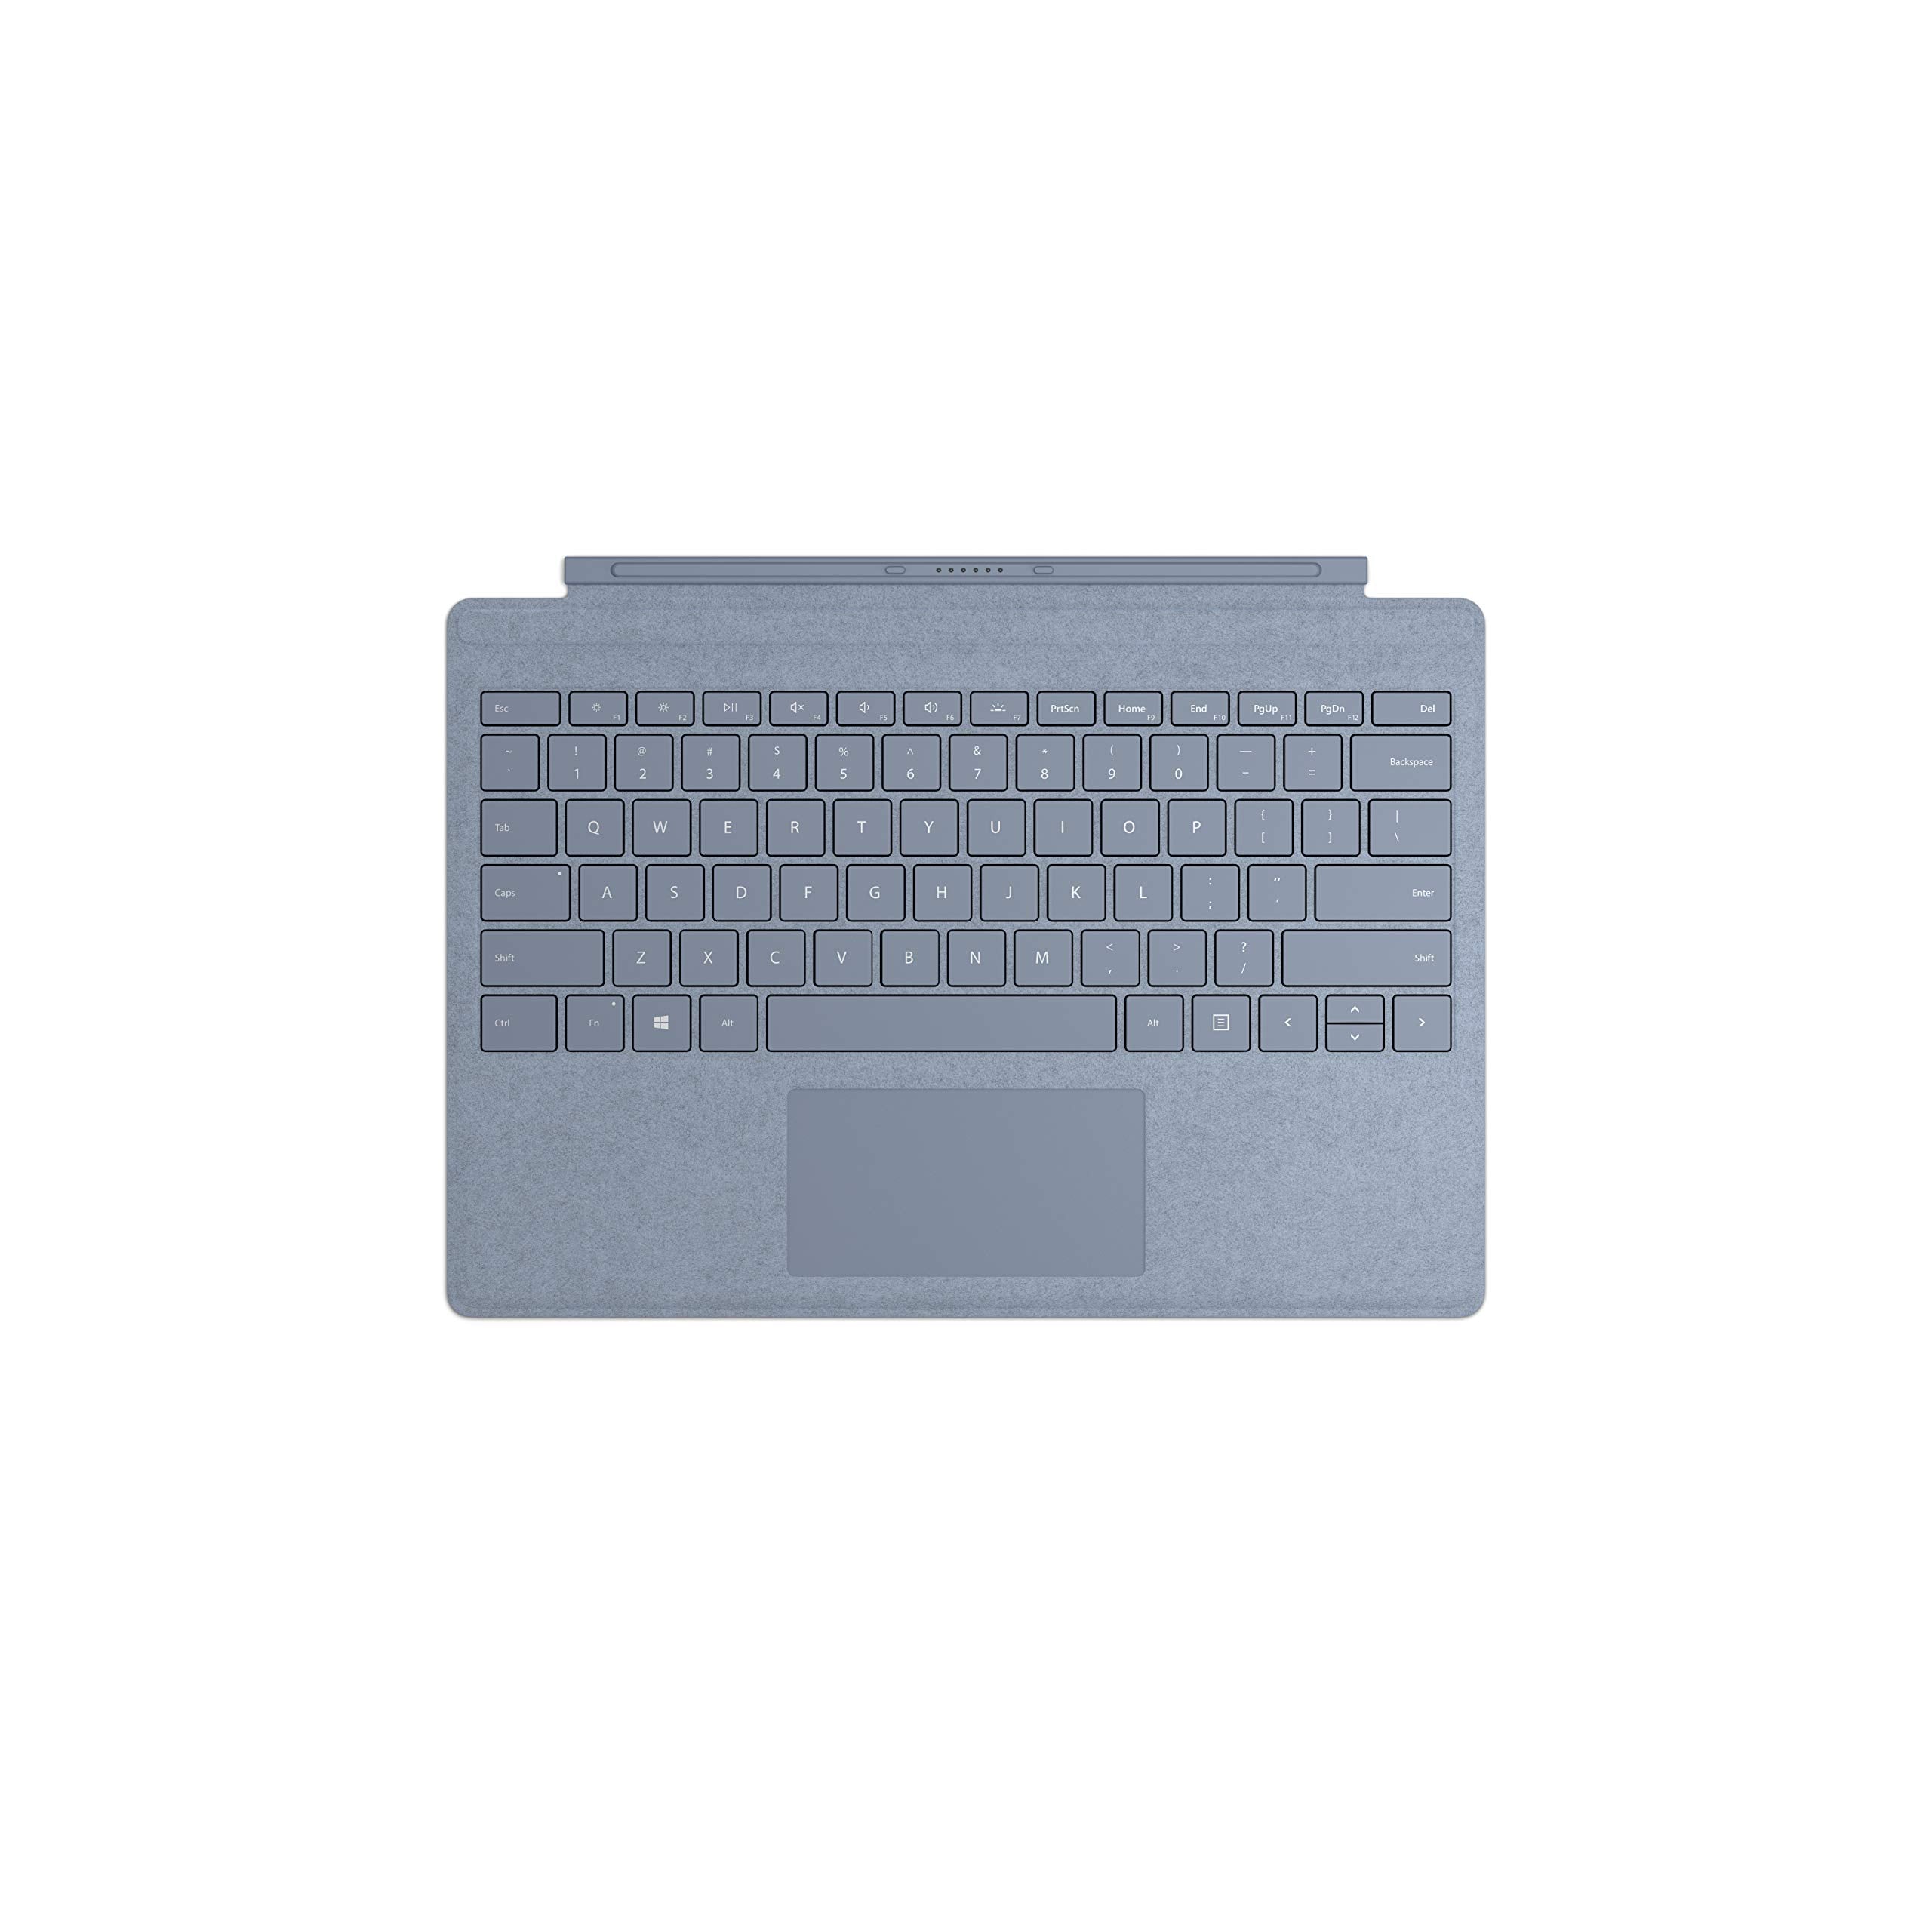 Microsoft Surface Pro Signature Type Cover – Ice Blue (Open Box, Like New)